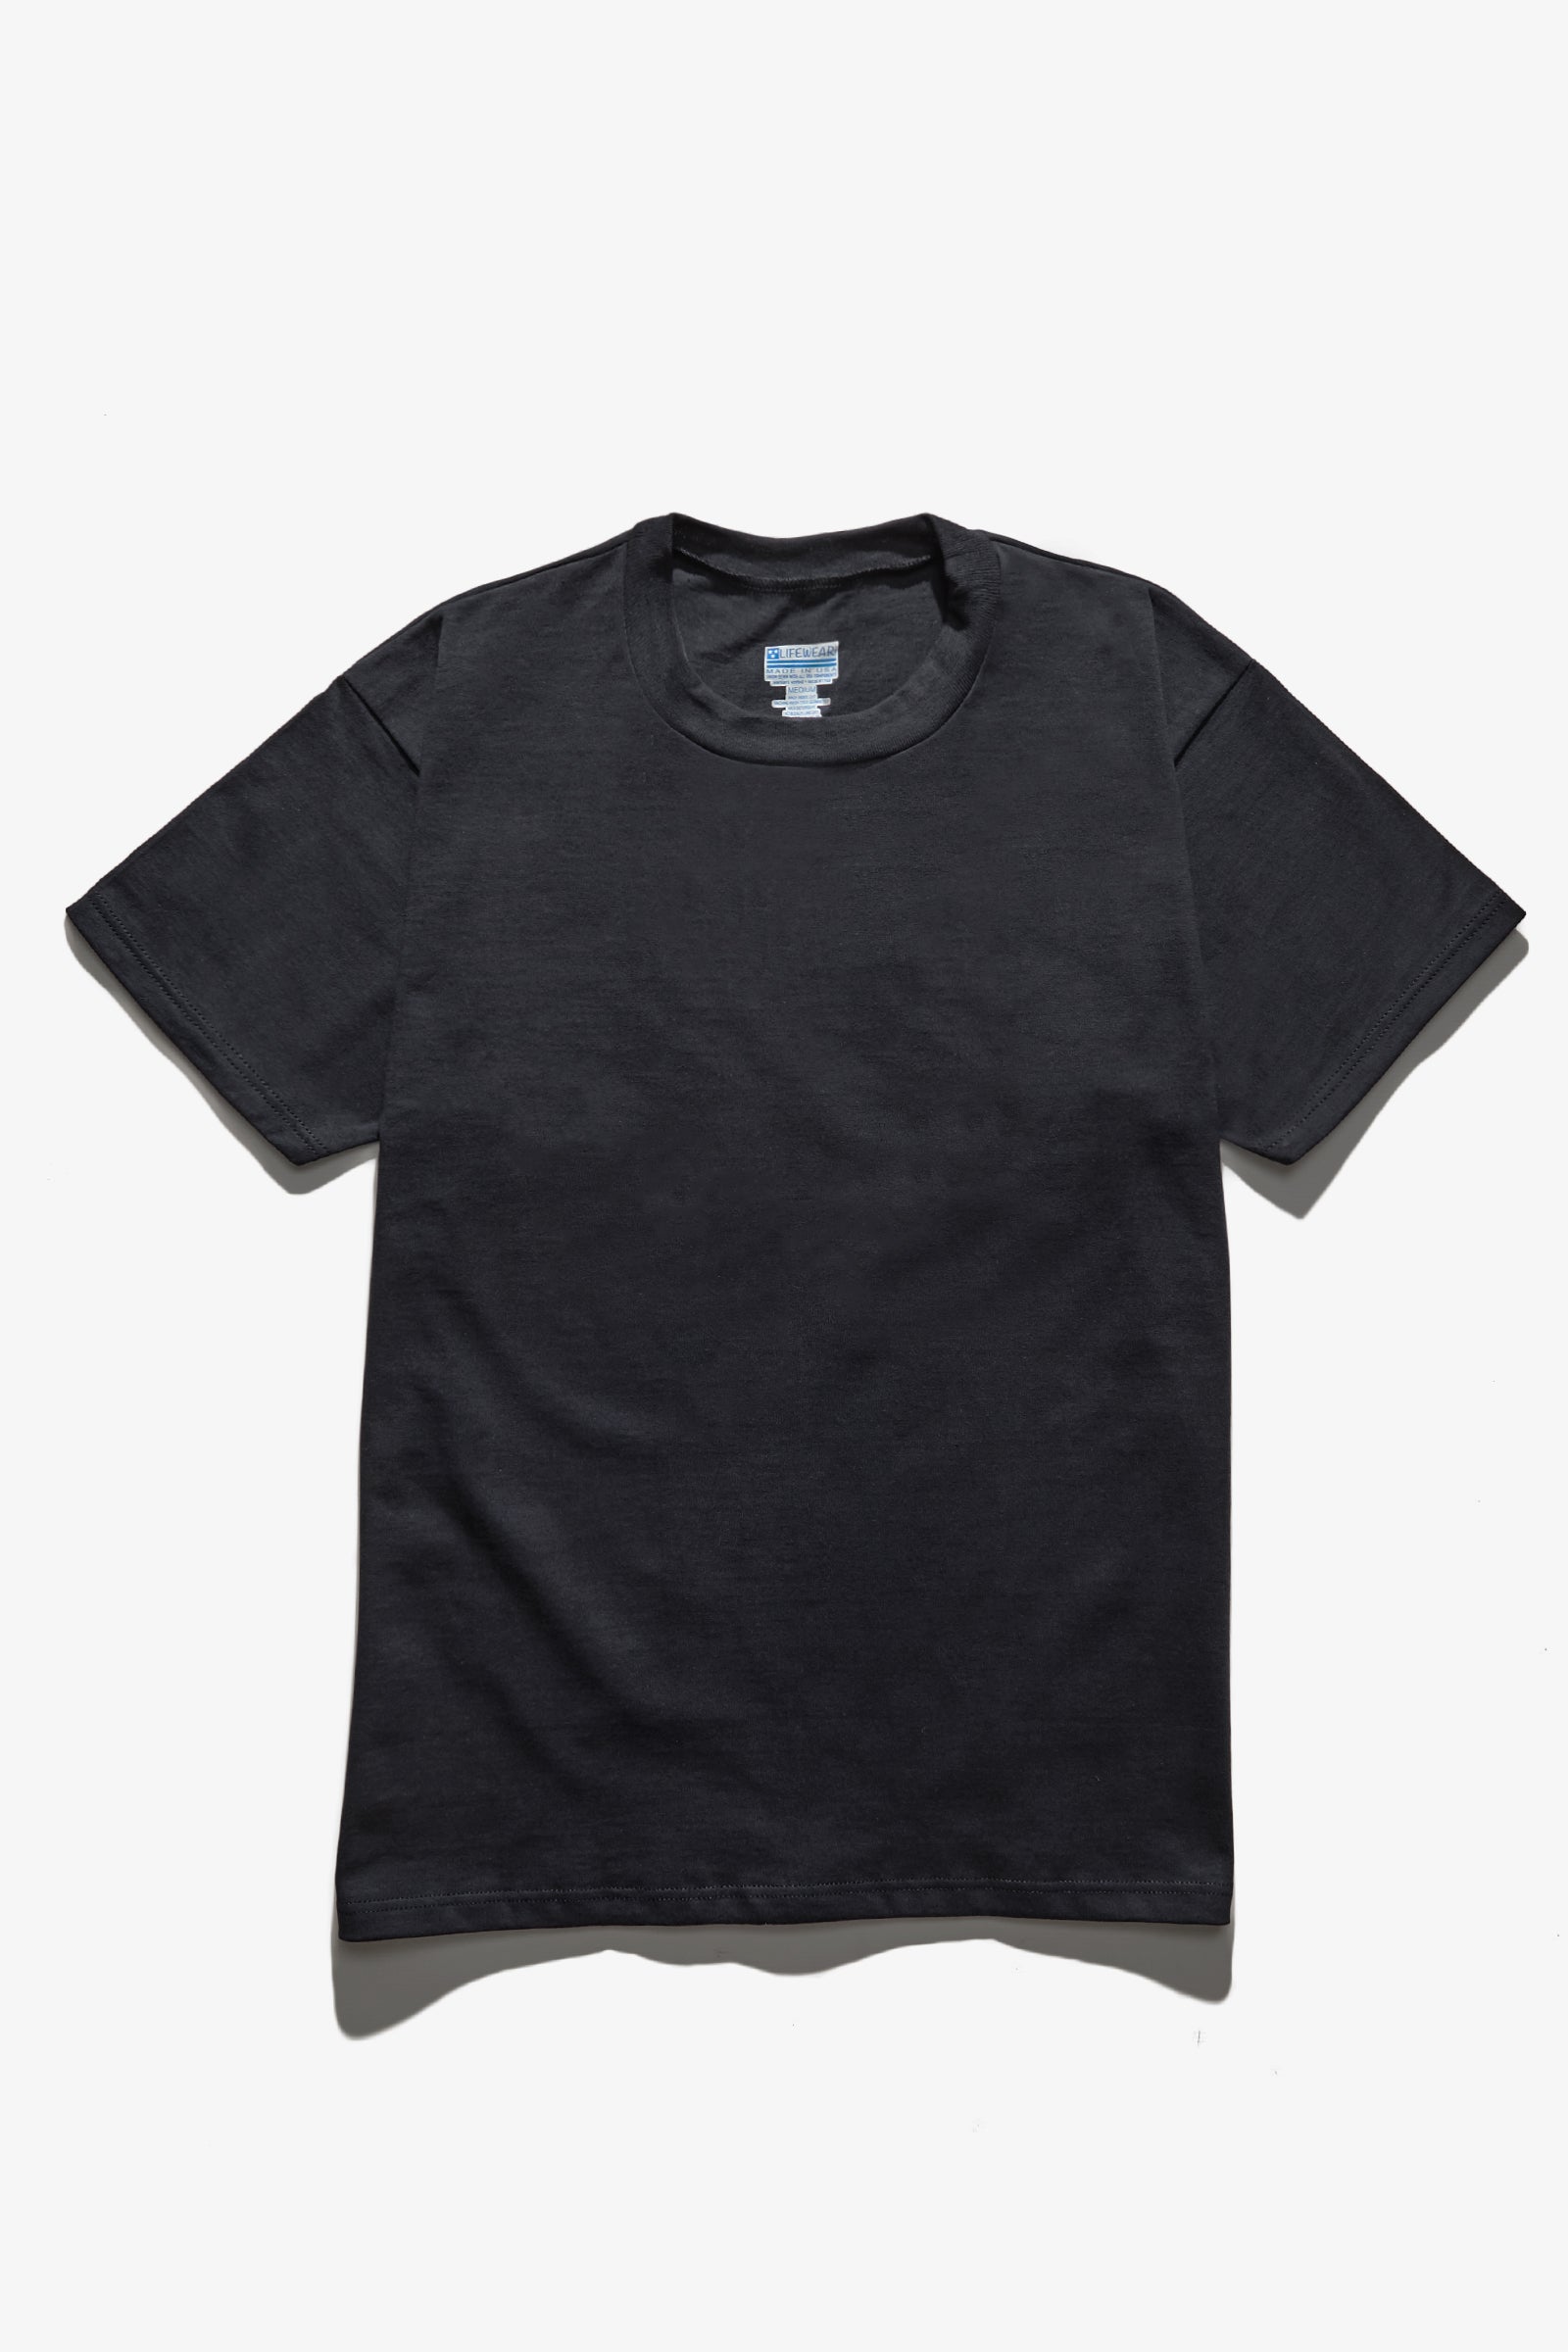 Lifewear USA - 7oz T-Shirt - Black | Blacksmith Store